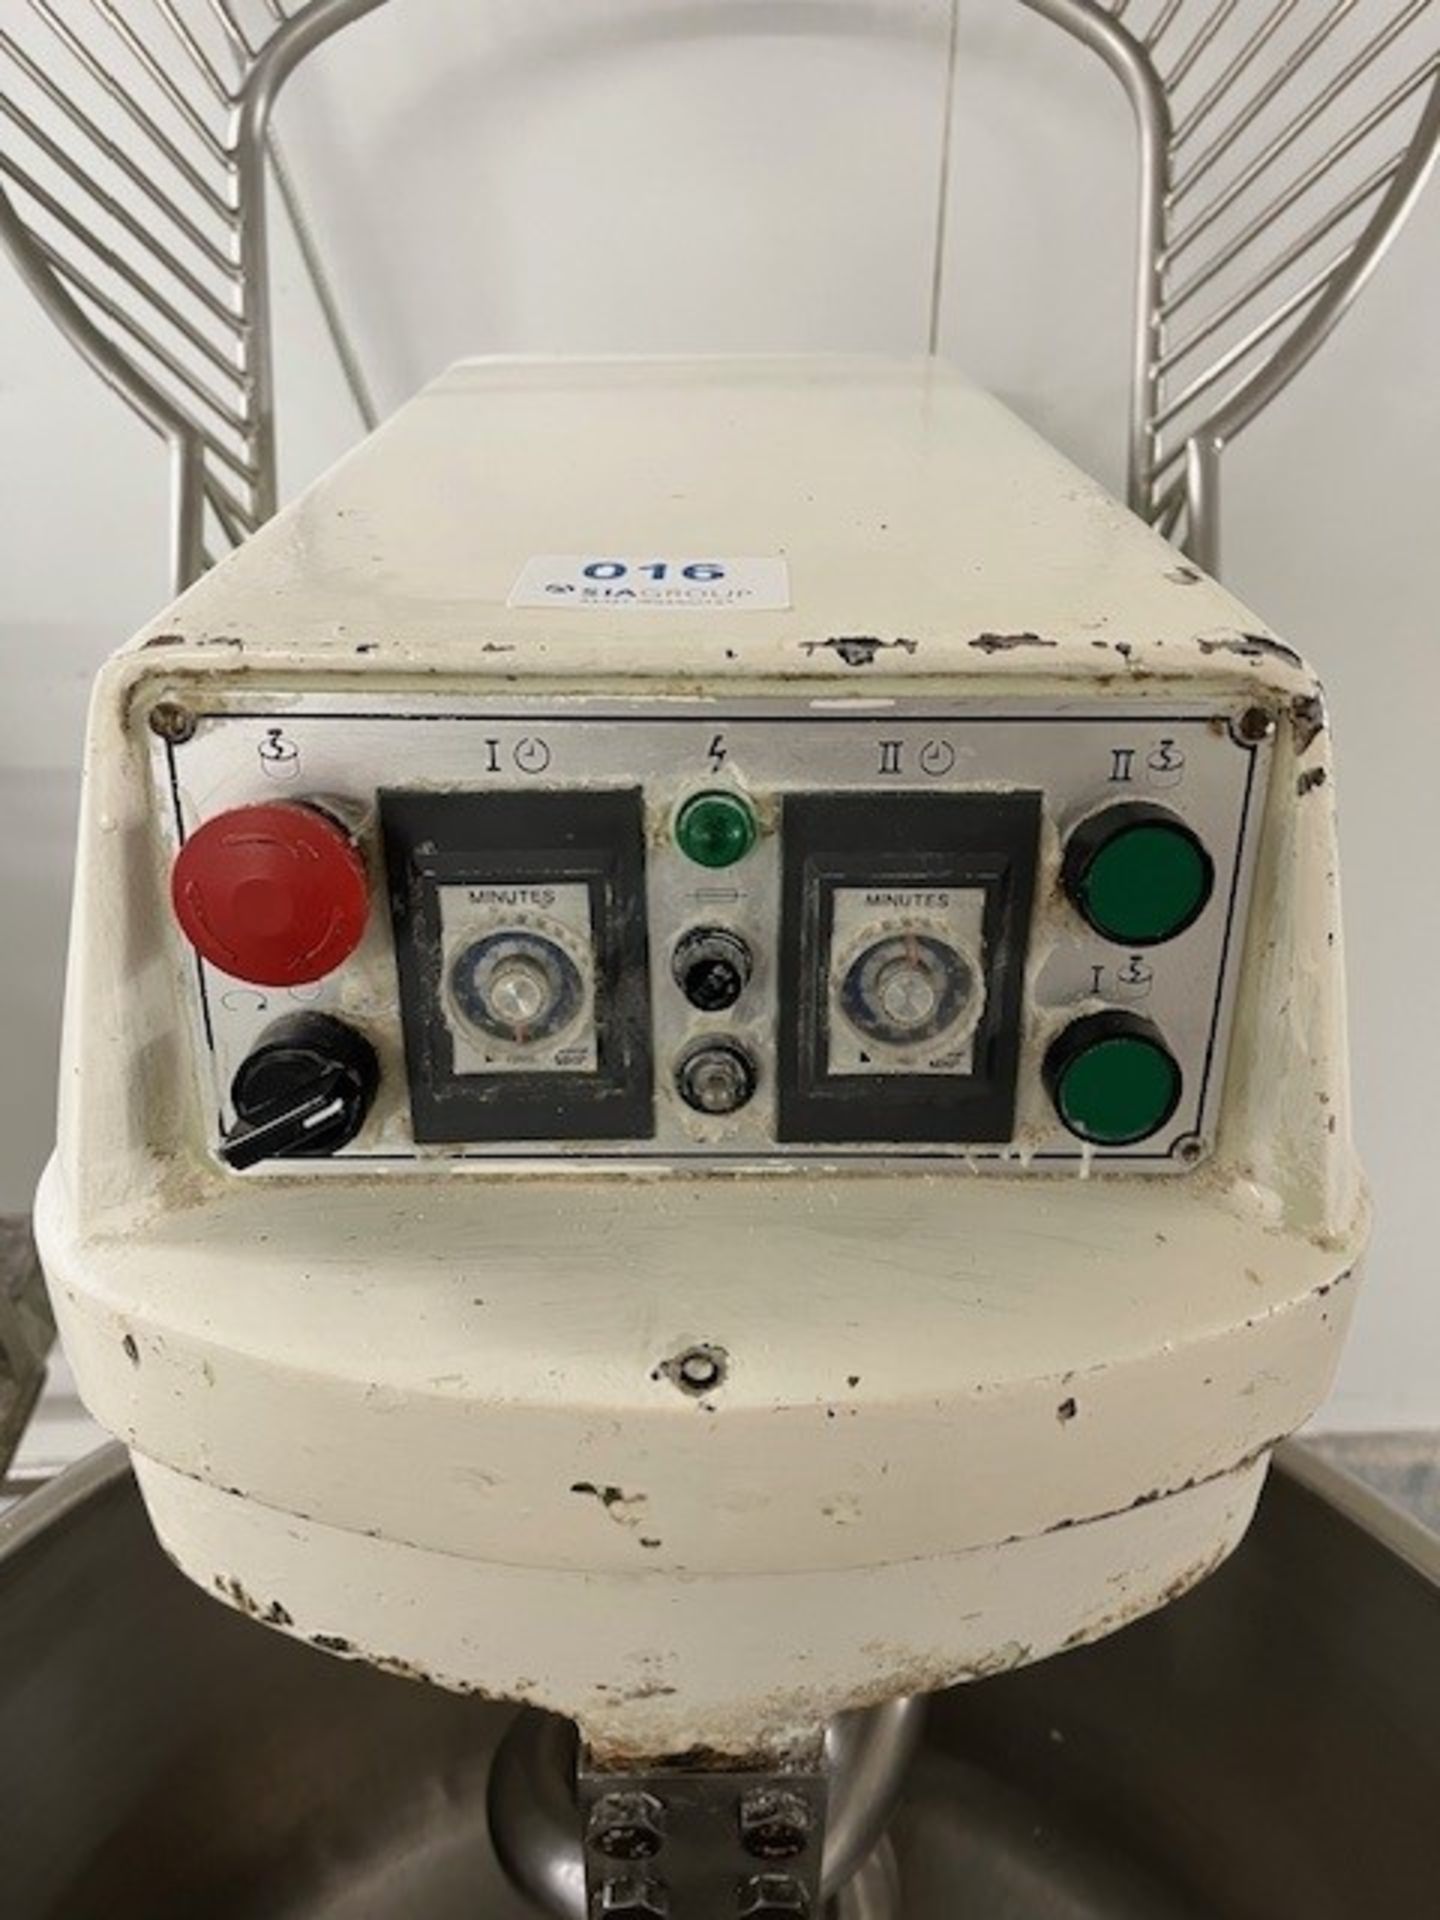 HSIAO Lin Machine Bakery Machine 50L planetary mixer - Image 4 of 5